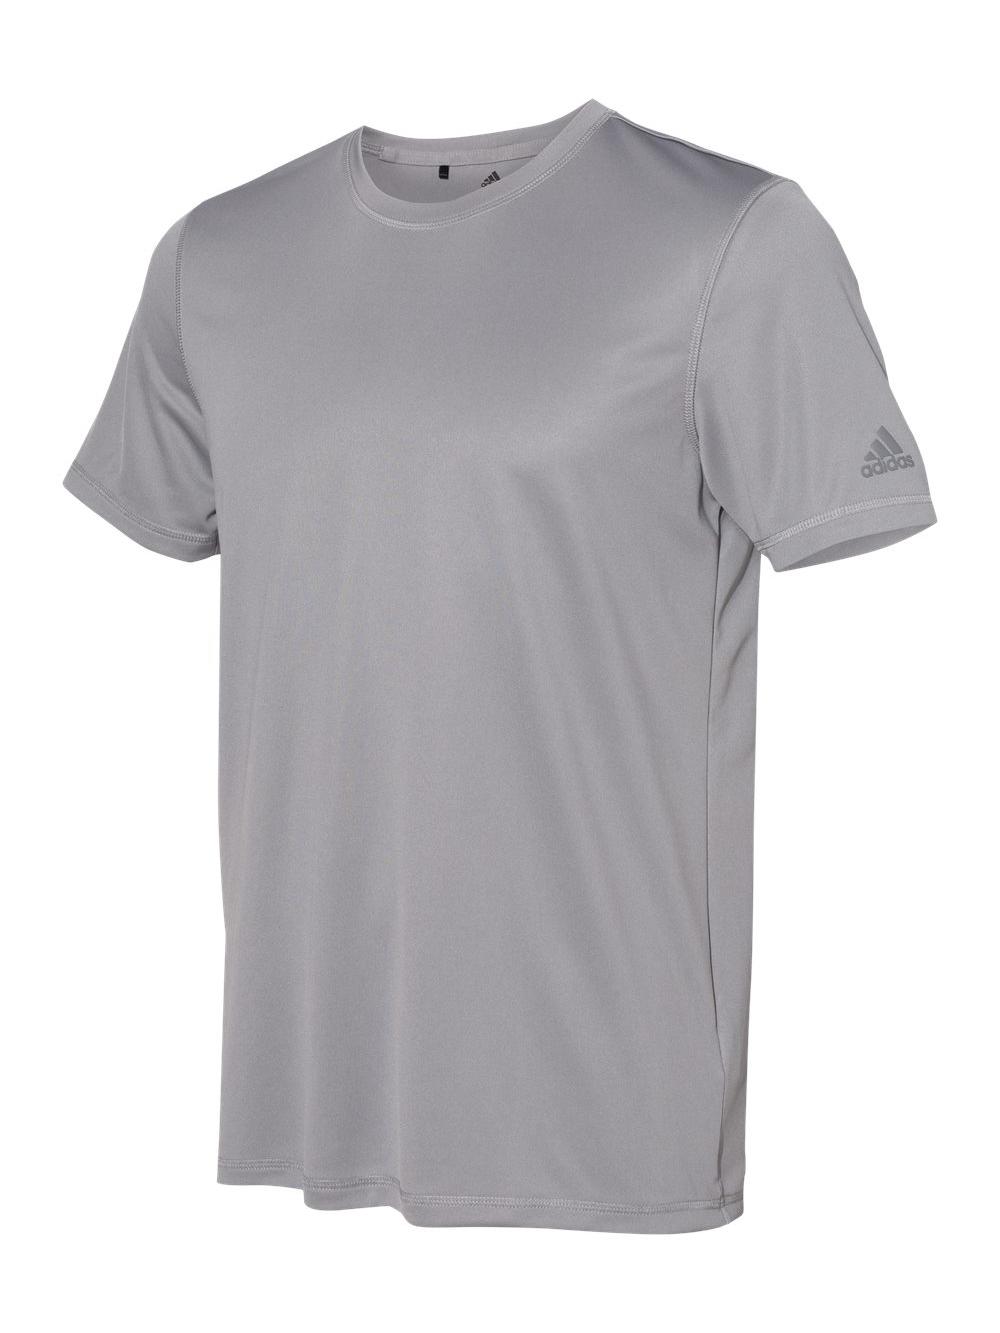 Adidas - Sport T-Shirt - A376 - Grey Three - Size: M - image 1 of 3